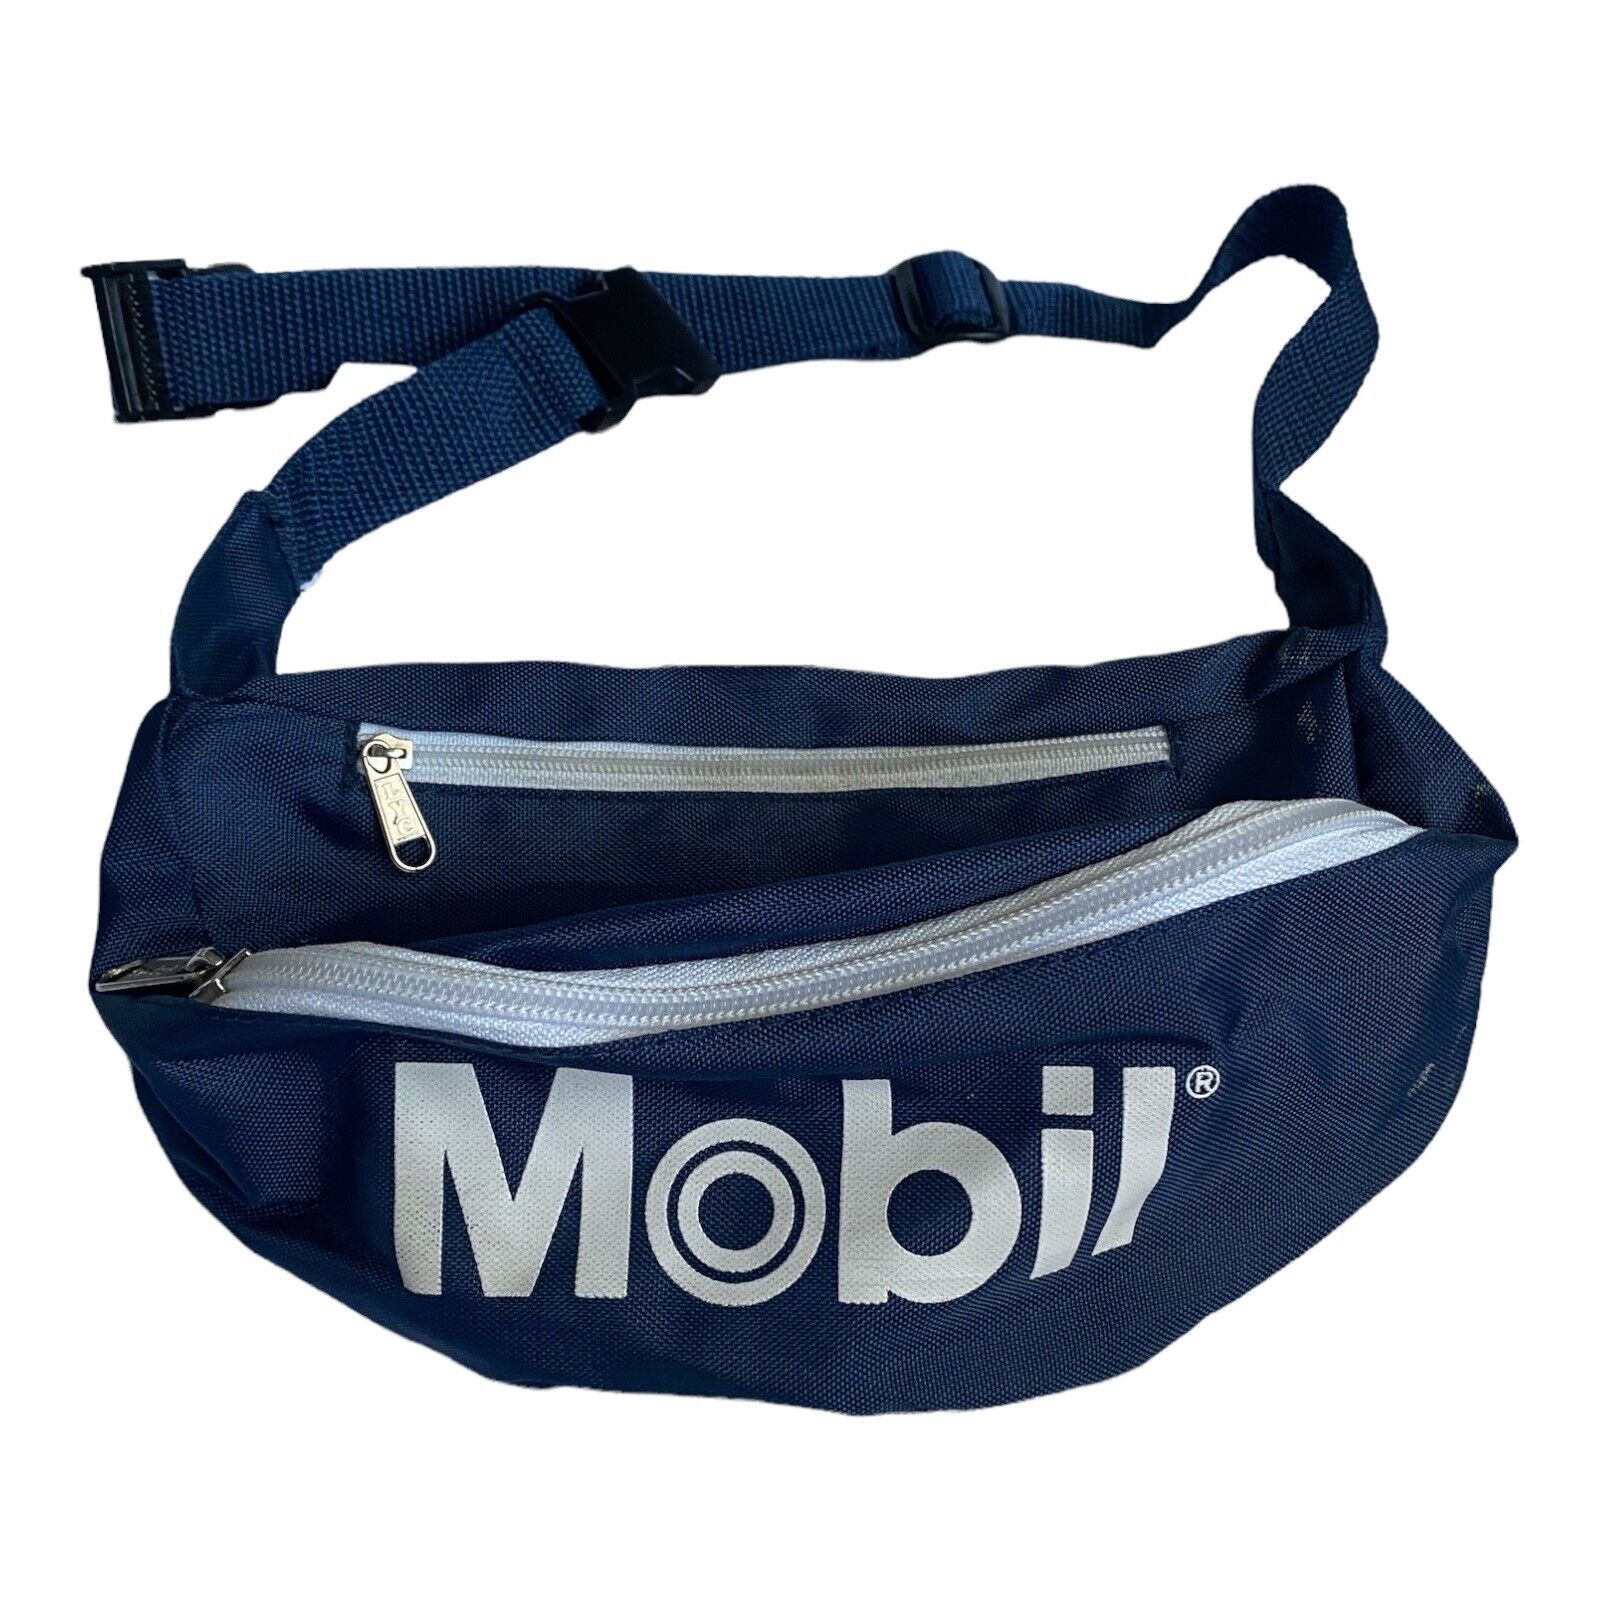 Vintage Exxon Mobil Fanny Pack Belt Waist Bag Gas Station Promo 80s Blue Men